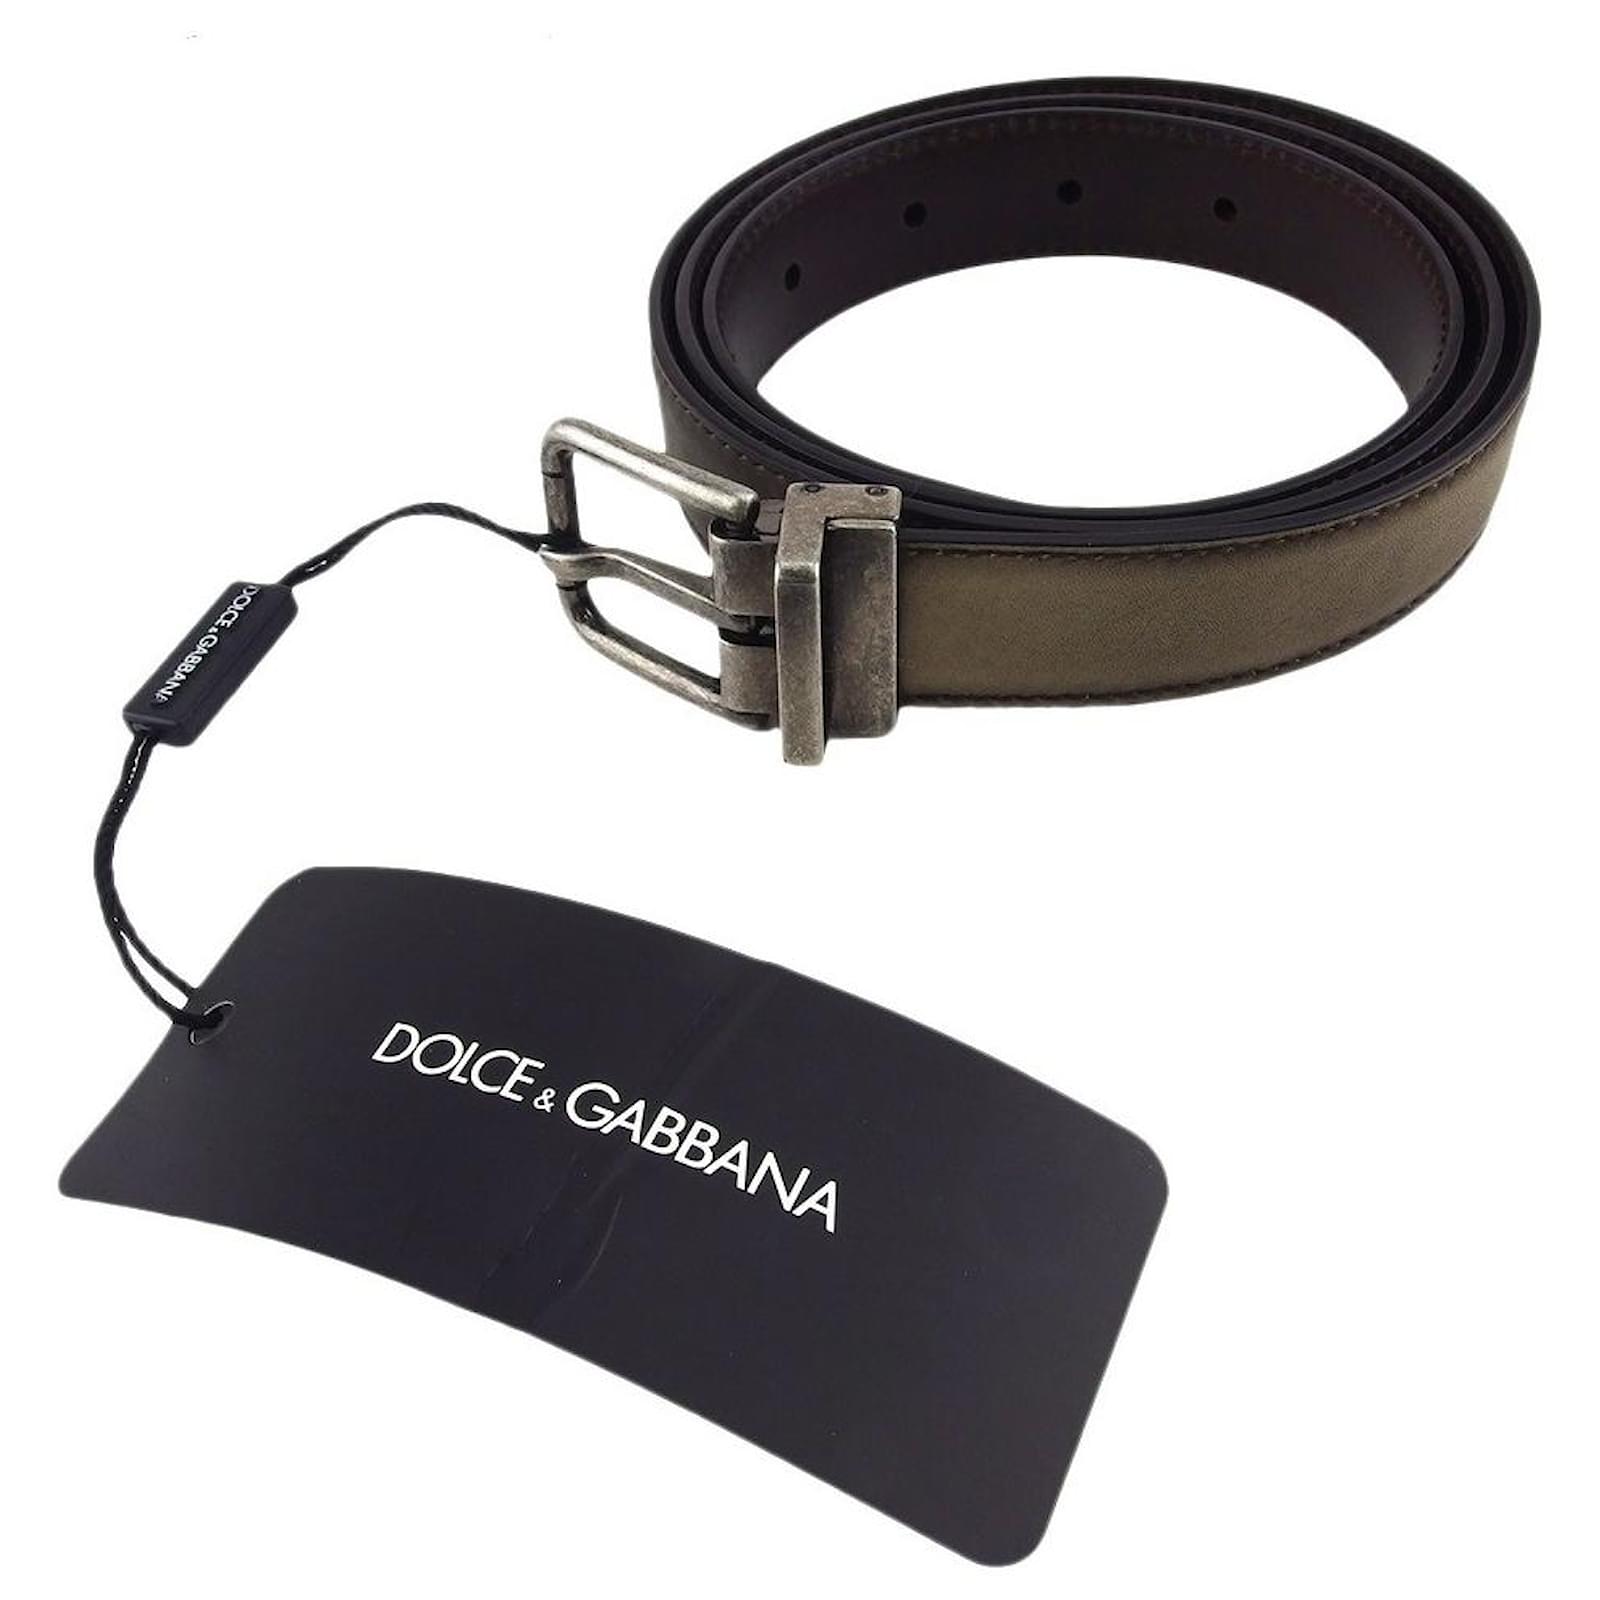 Dolce & Gabbana Men's Logo Leather Belt